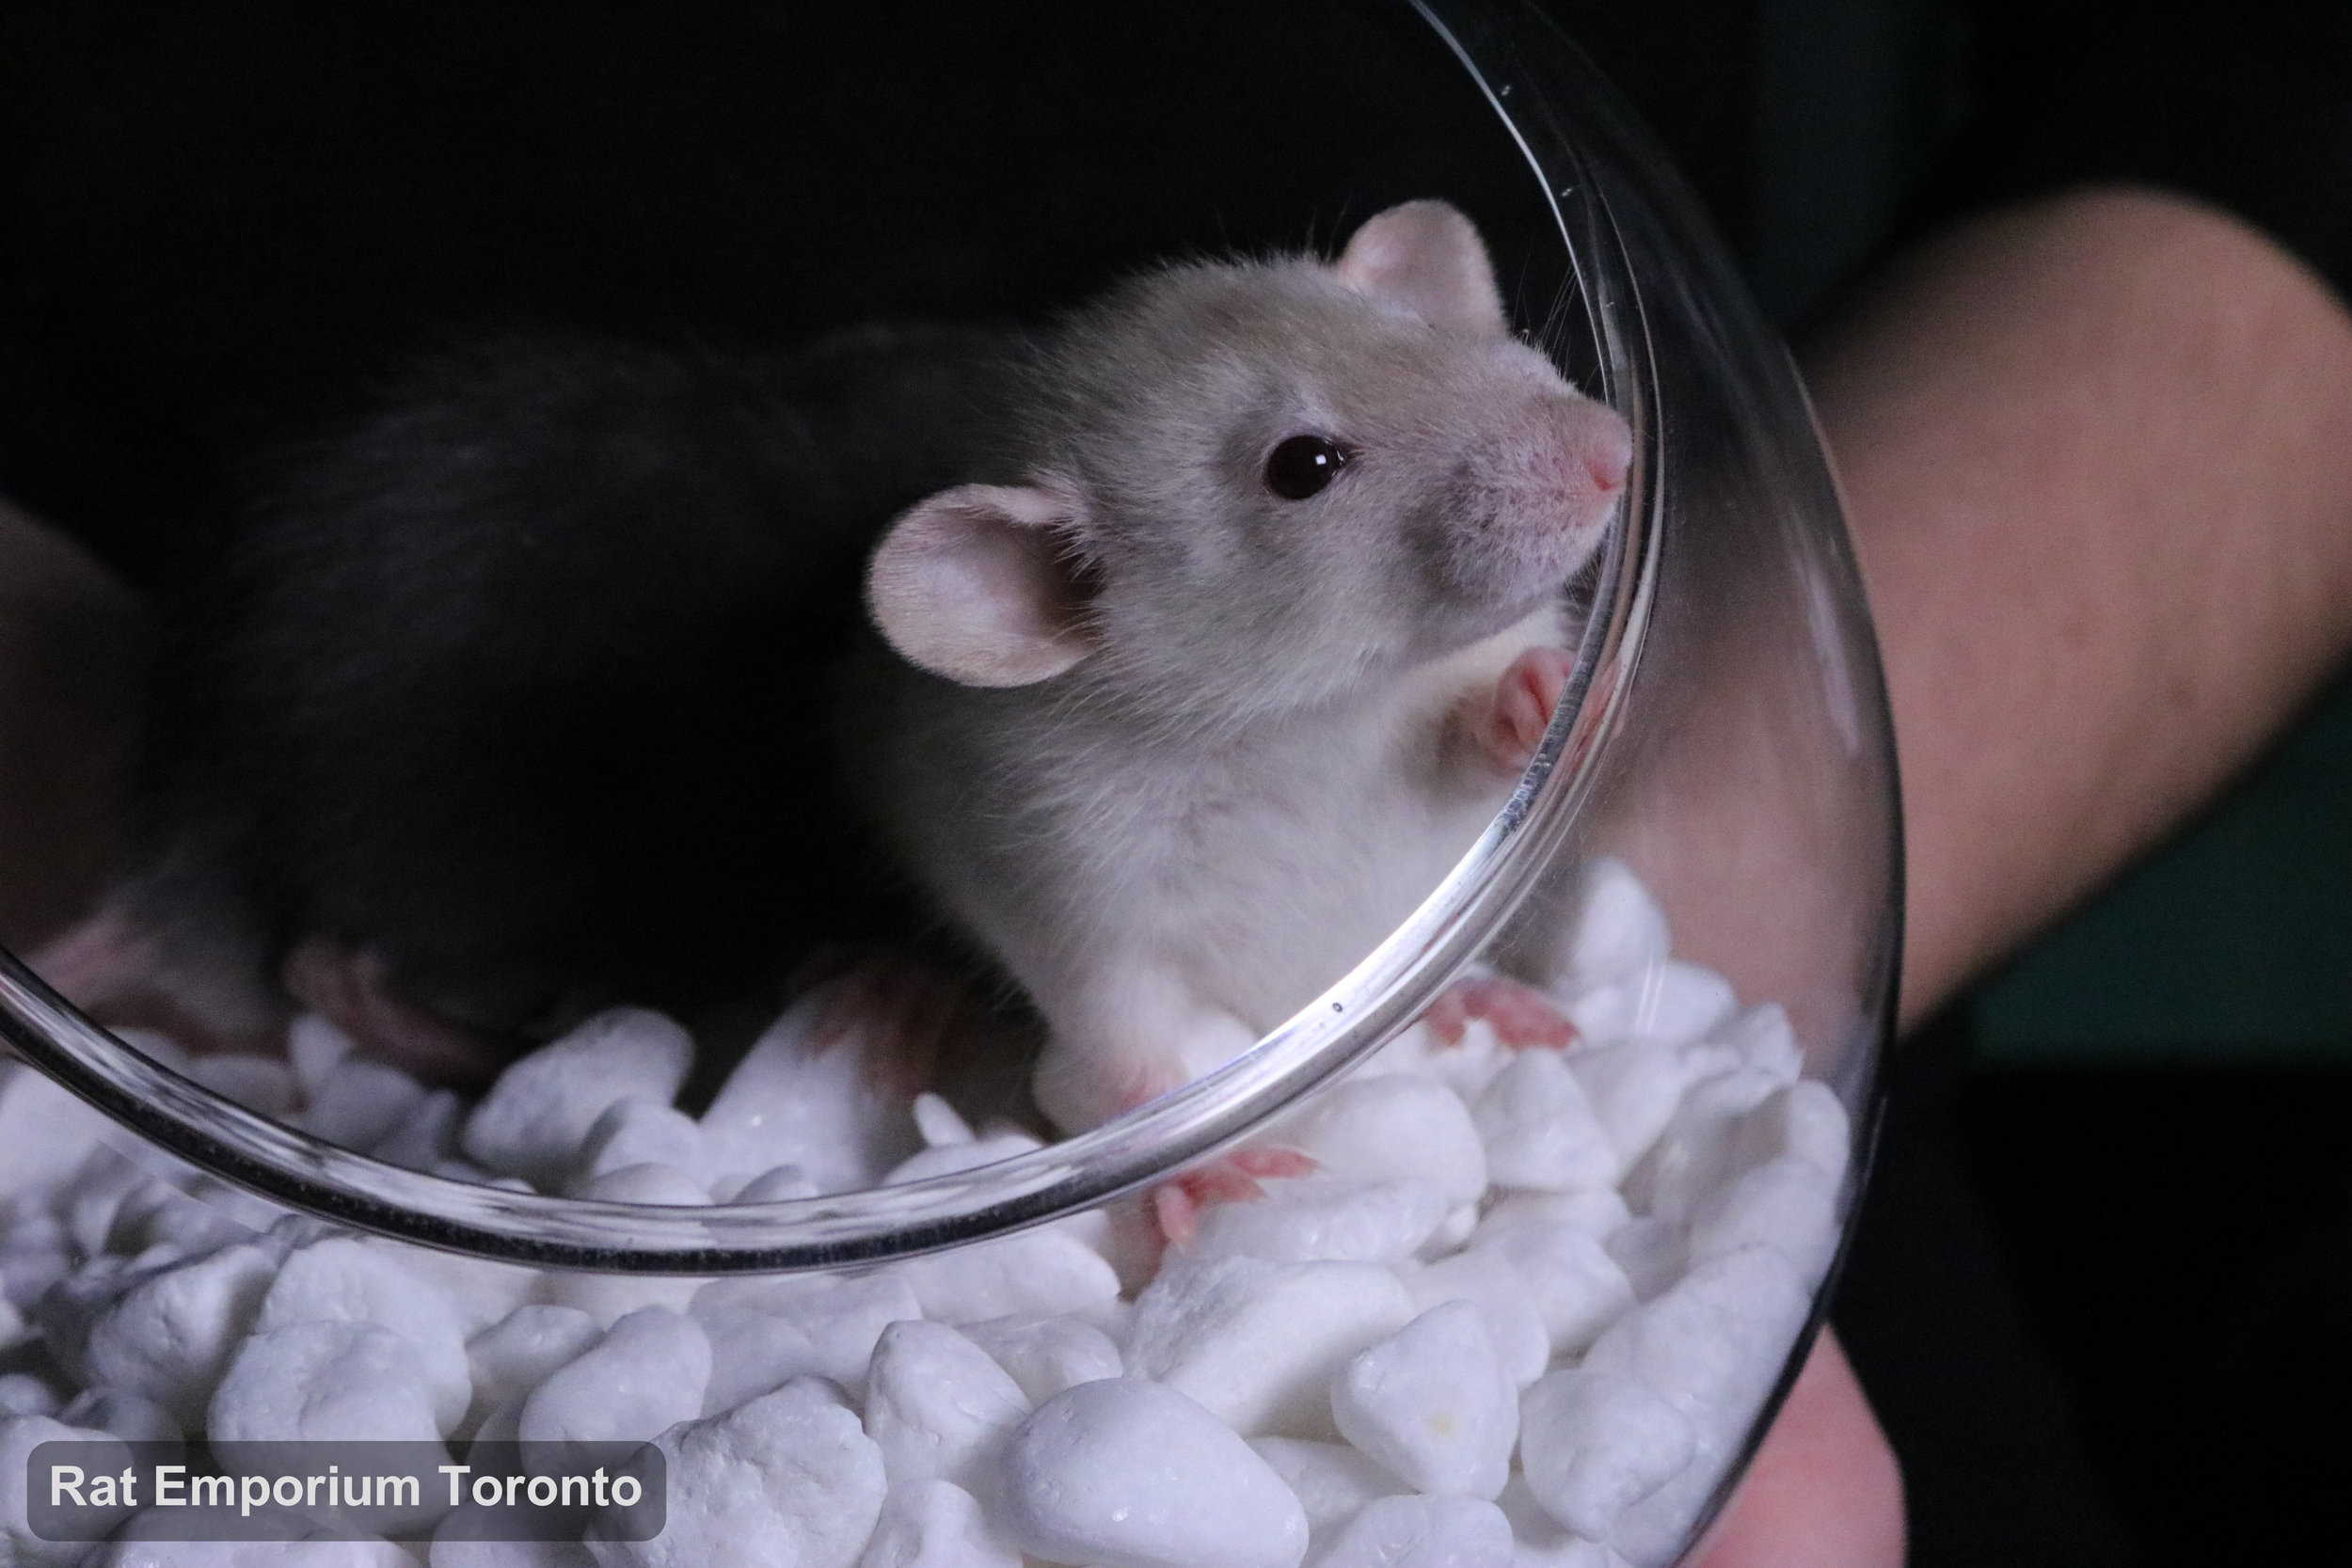 mink, siamese, black and agouti silvermane dumbo rats - born and raised at the Rat Emporium Toronto - pet rat breeder